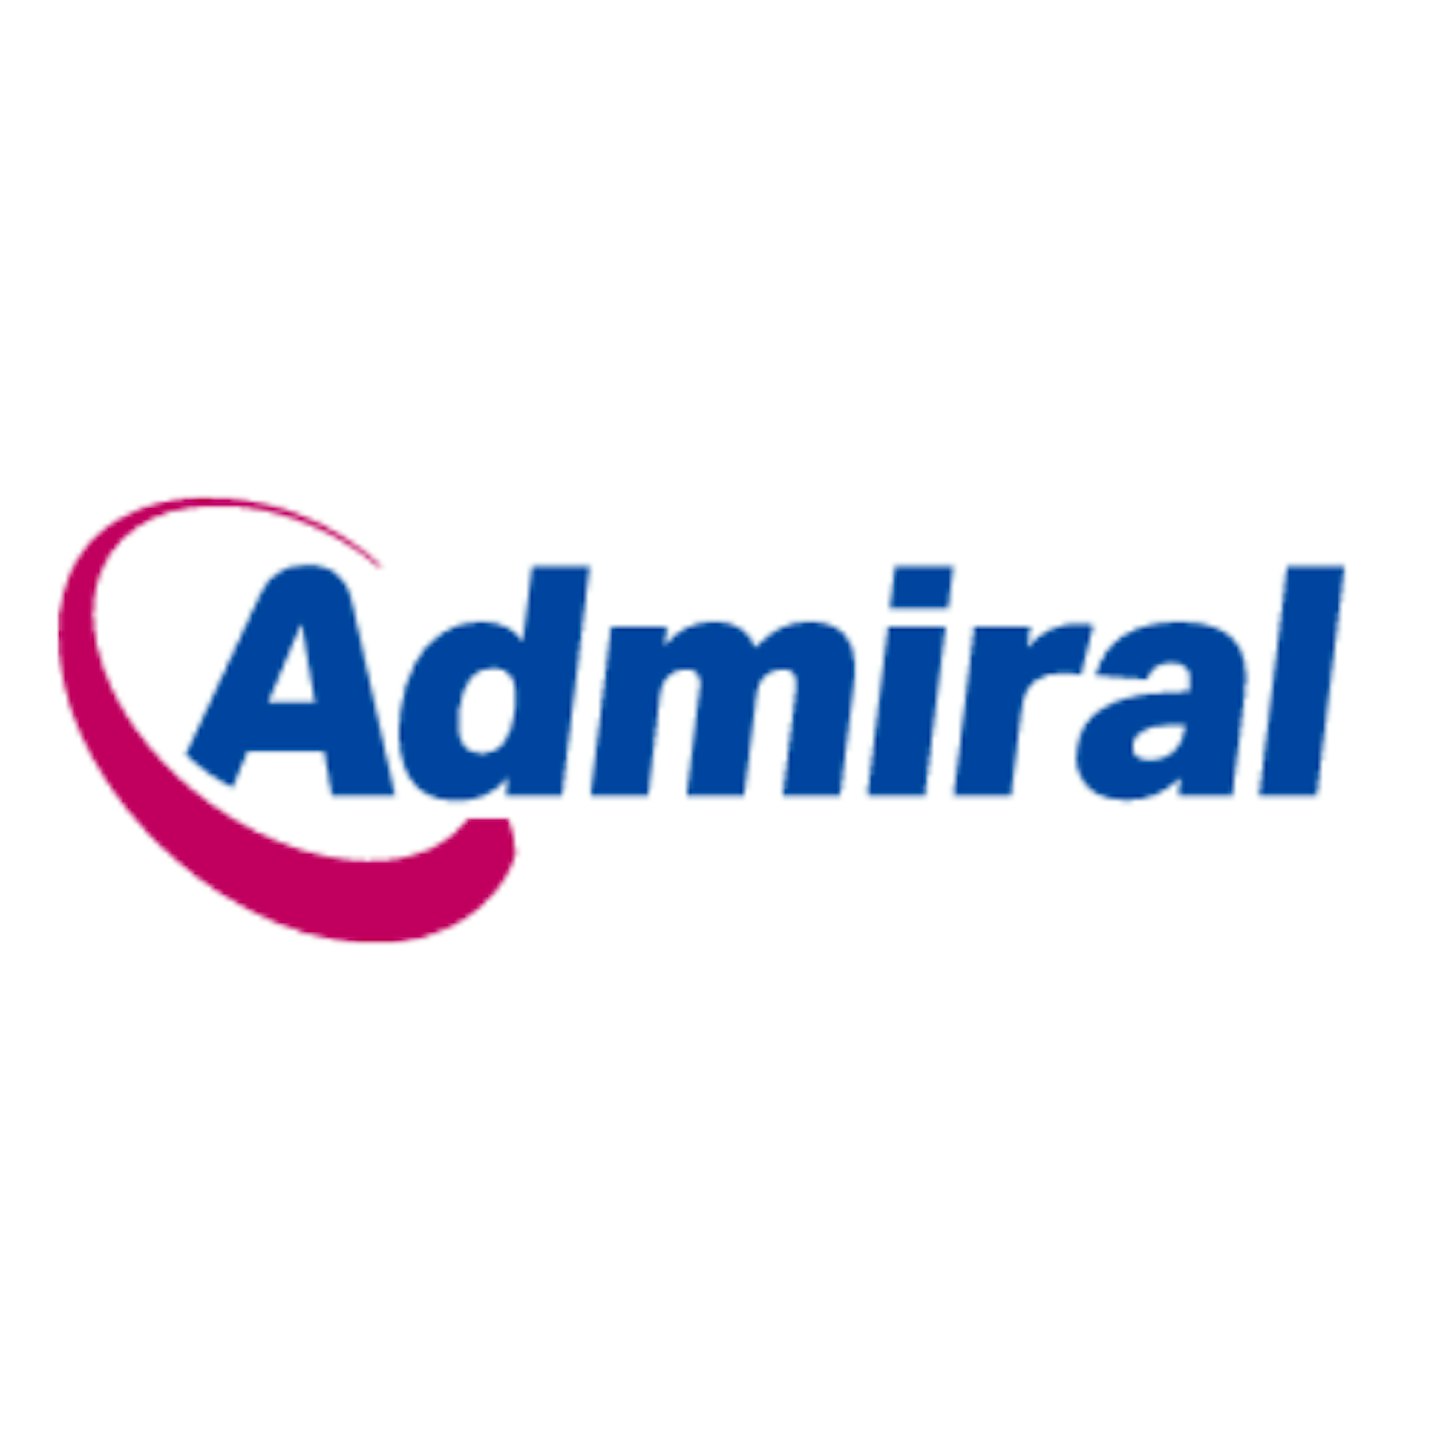 admiral travel insurance mental health